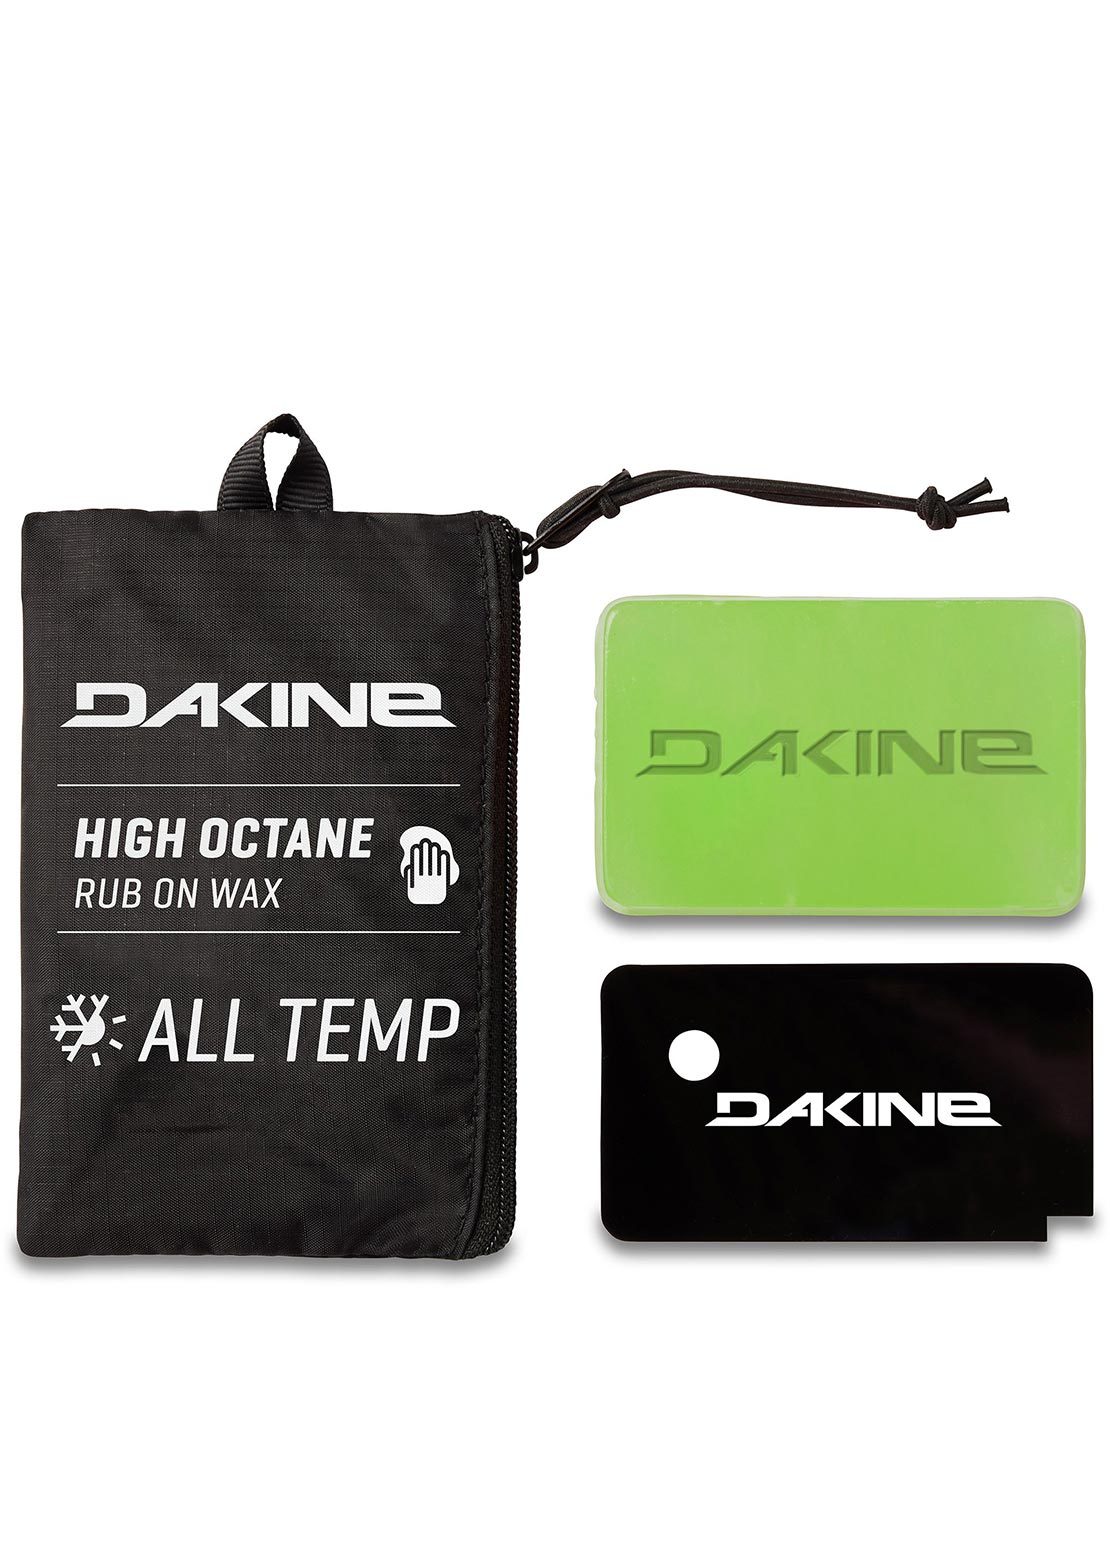 Dakine High Octane Rub On Wax